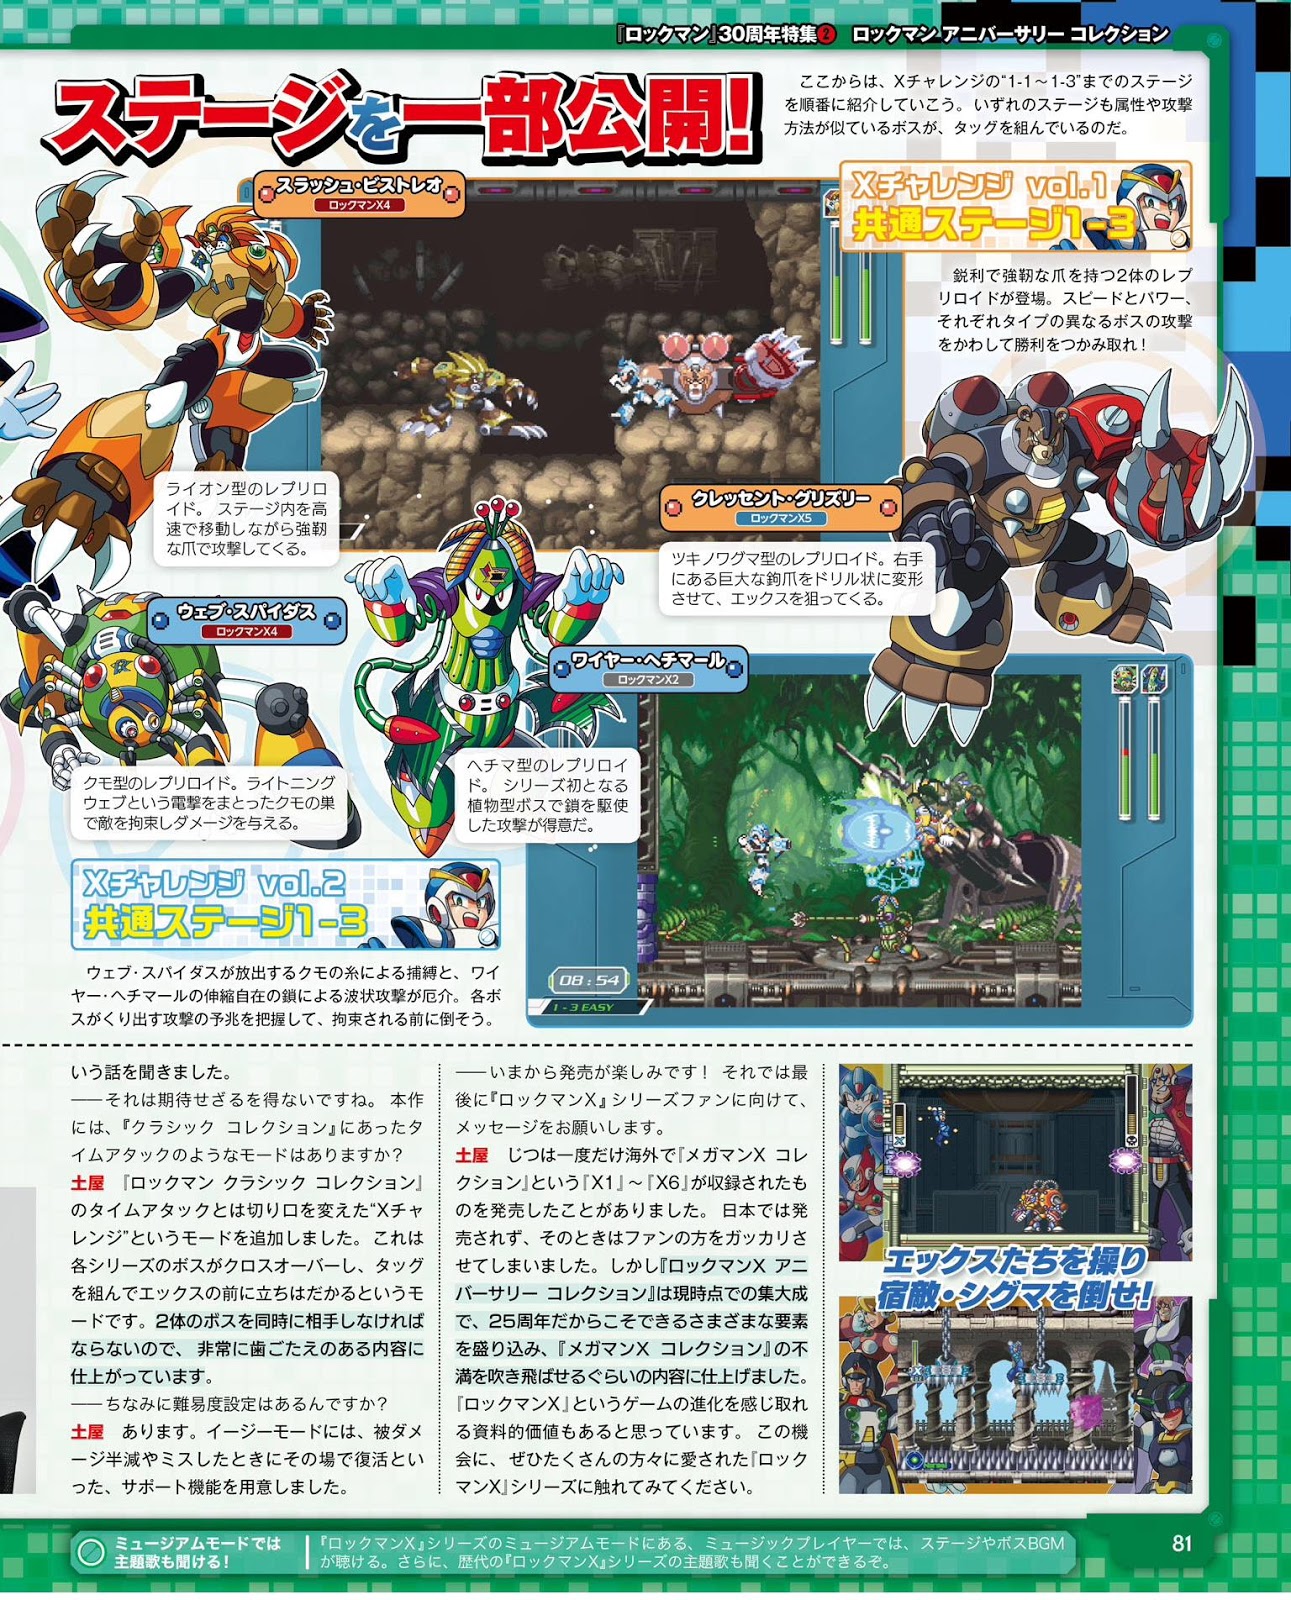 Rockman Corner New X Challenge Details From Famitsu Mega Man X Legacy Collection 1 2